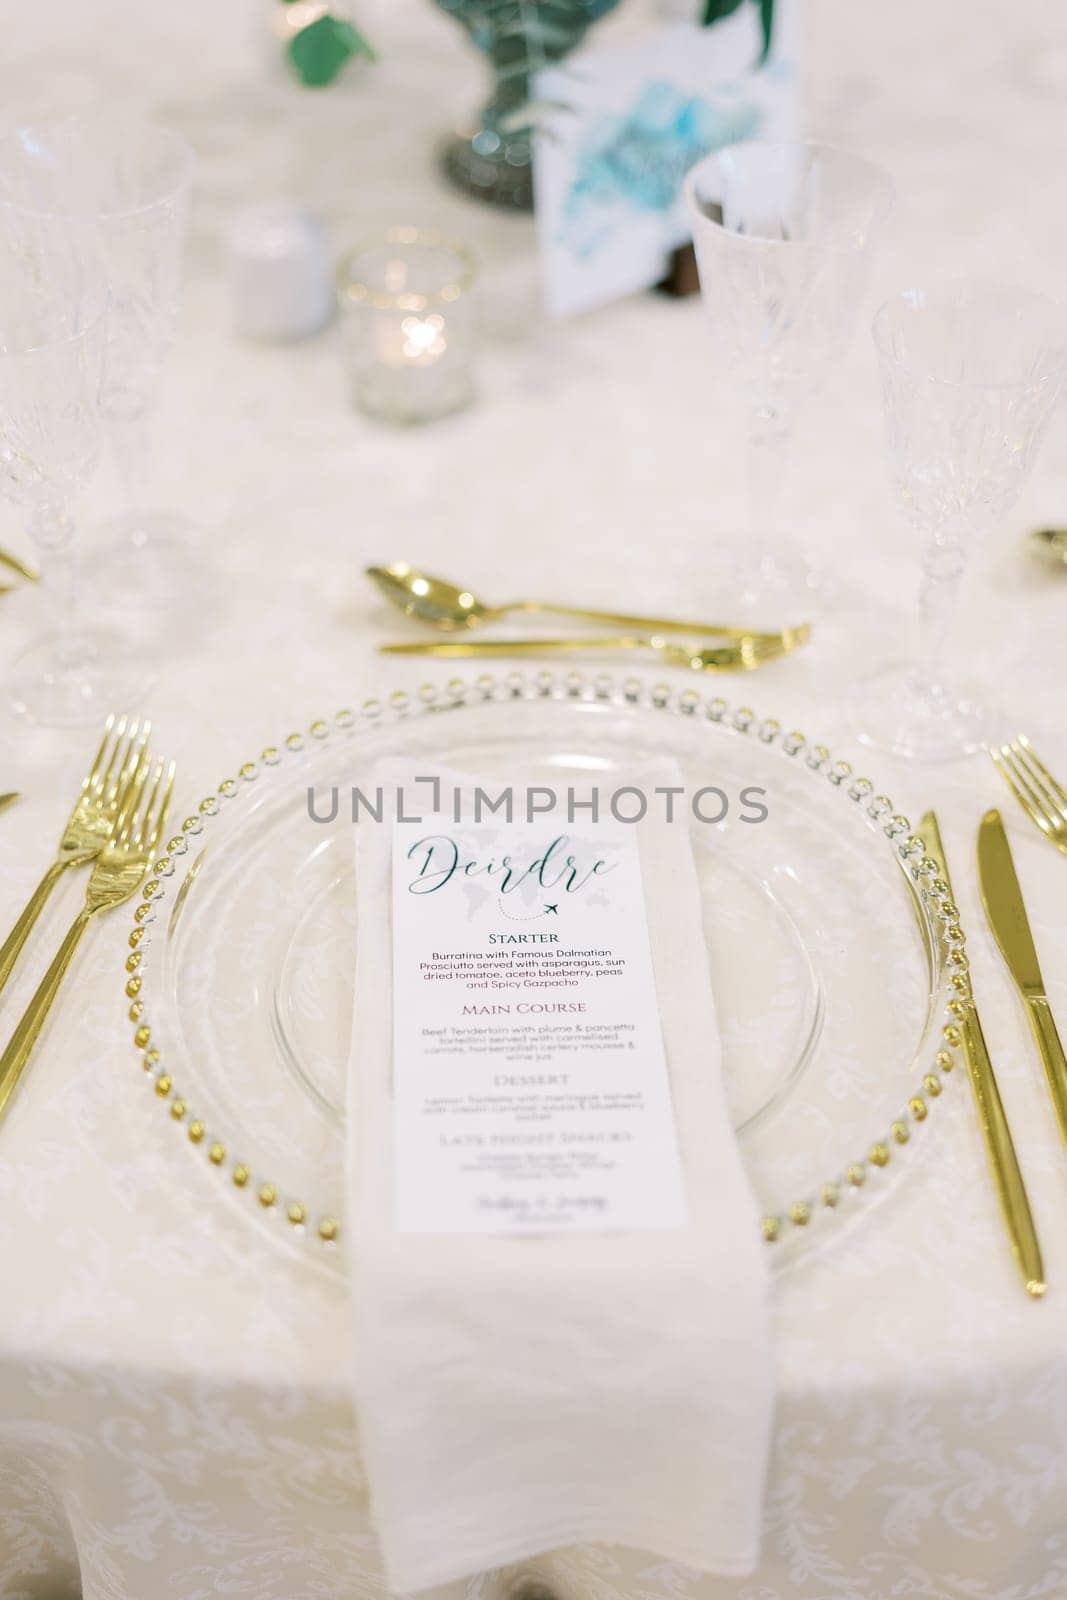 Banquet menu lies on a plate on a set festive table. High quality photo